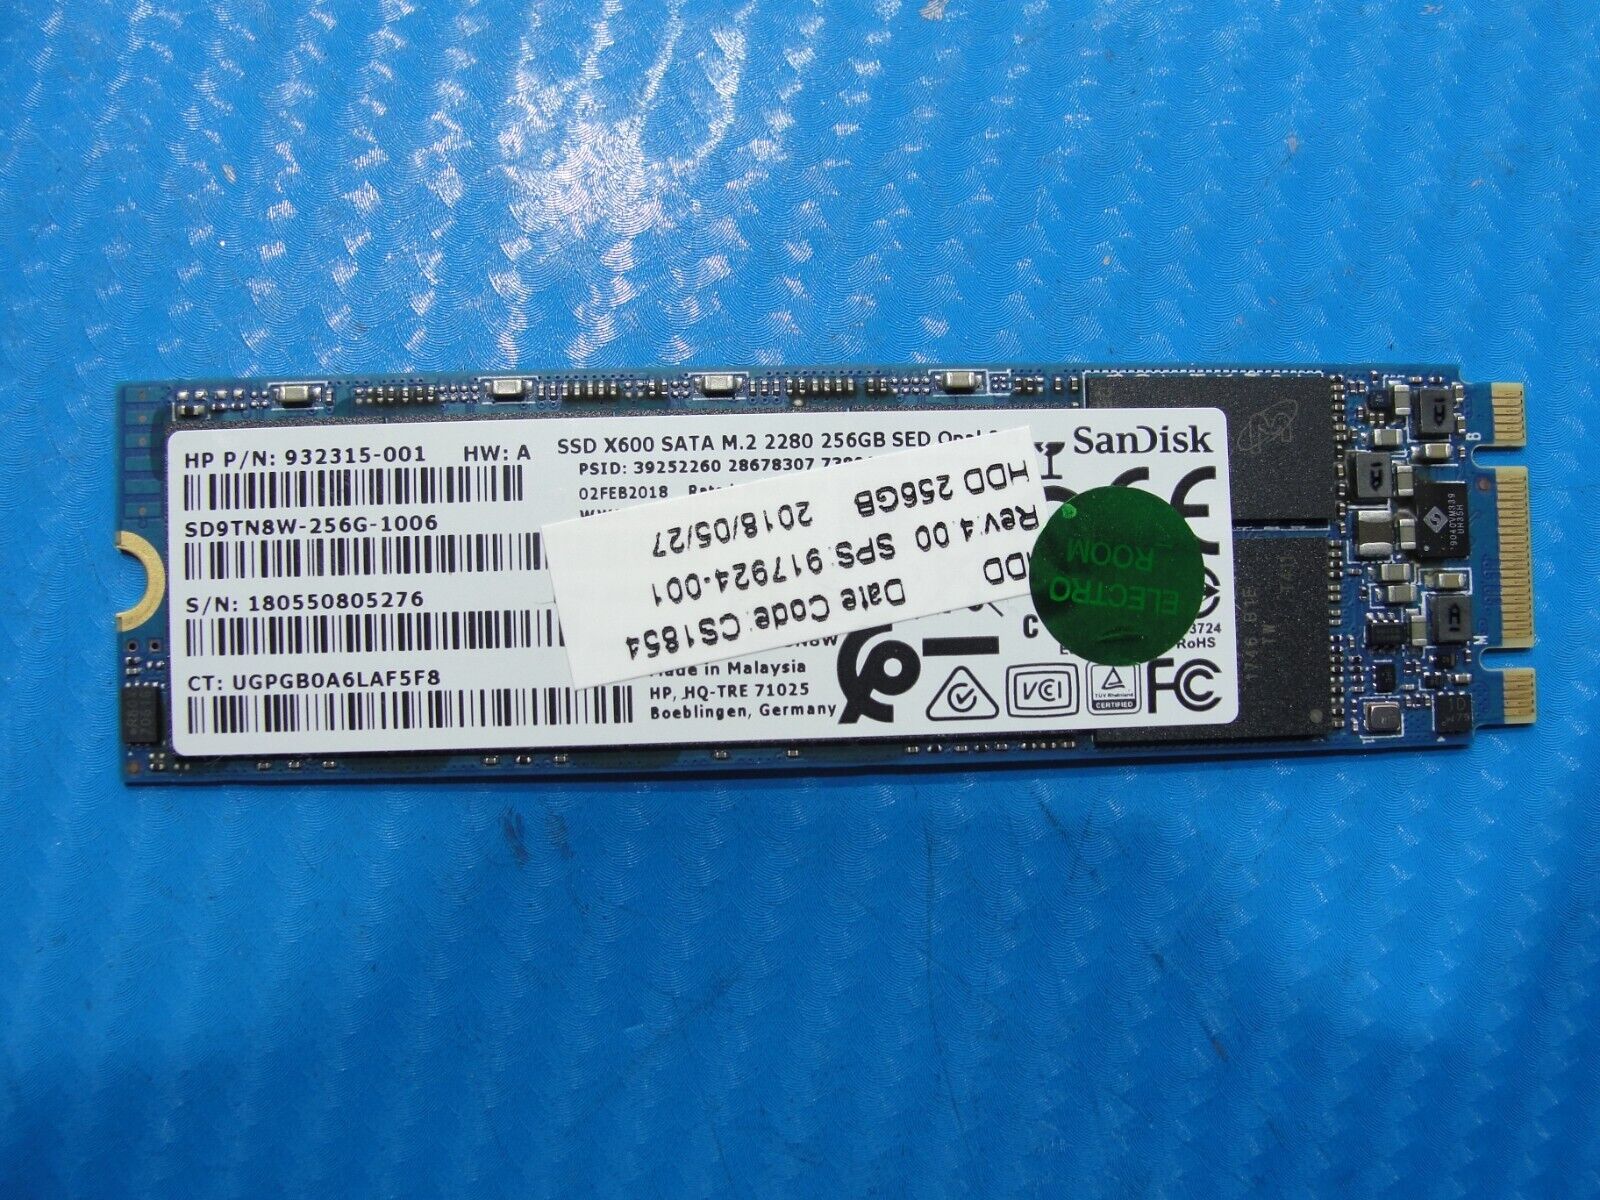 HP 1030 G2 SanDisk 256Gb Sata M.2 SSD Solid State Drive SD9TN8W-256G-1006